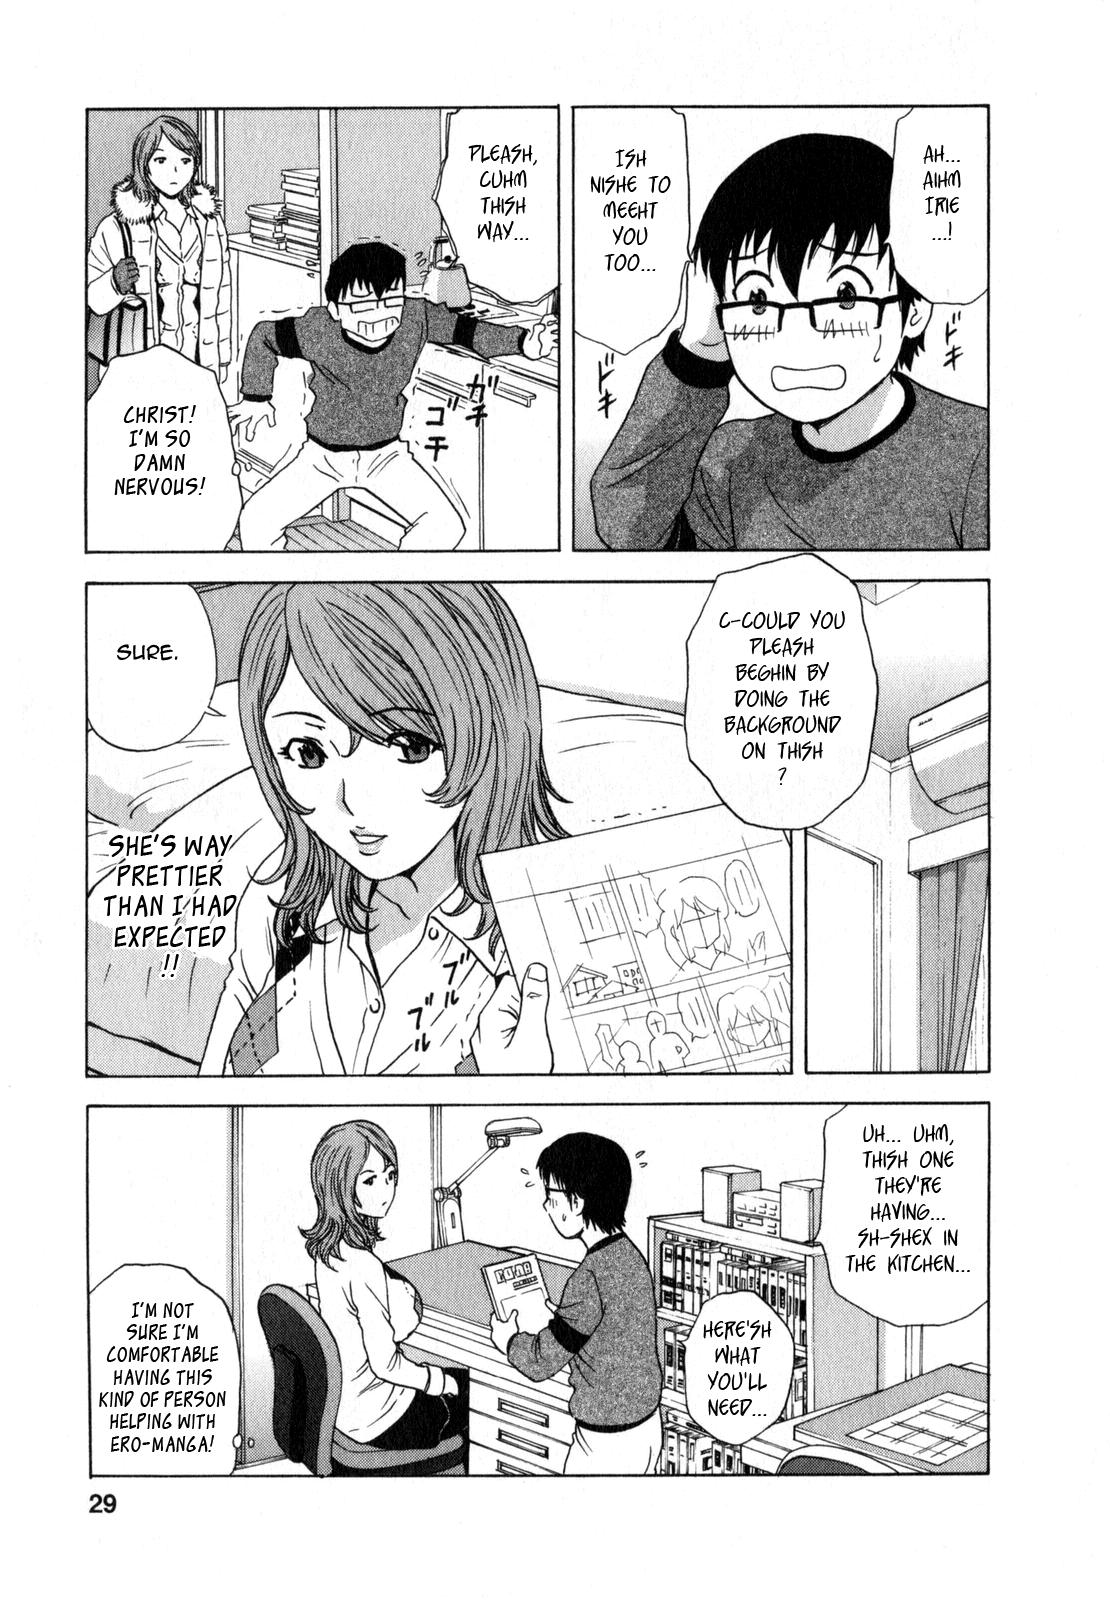 [Hidemaru] Life with Married Women Just Like a Manga 2 - Ch. 1-7 [English] {Tadanohito} 29